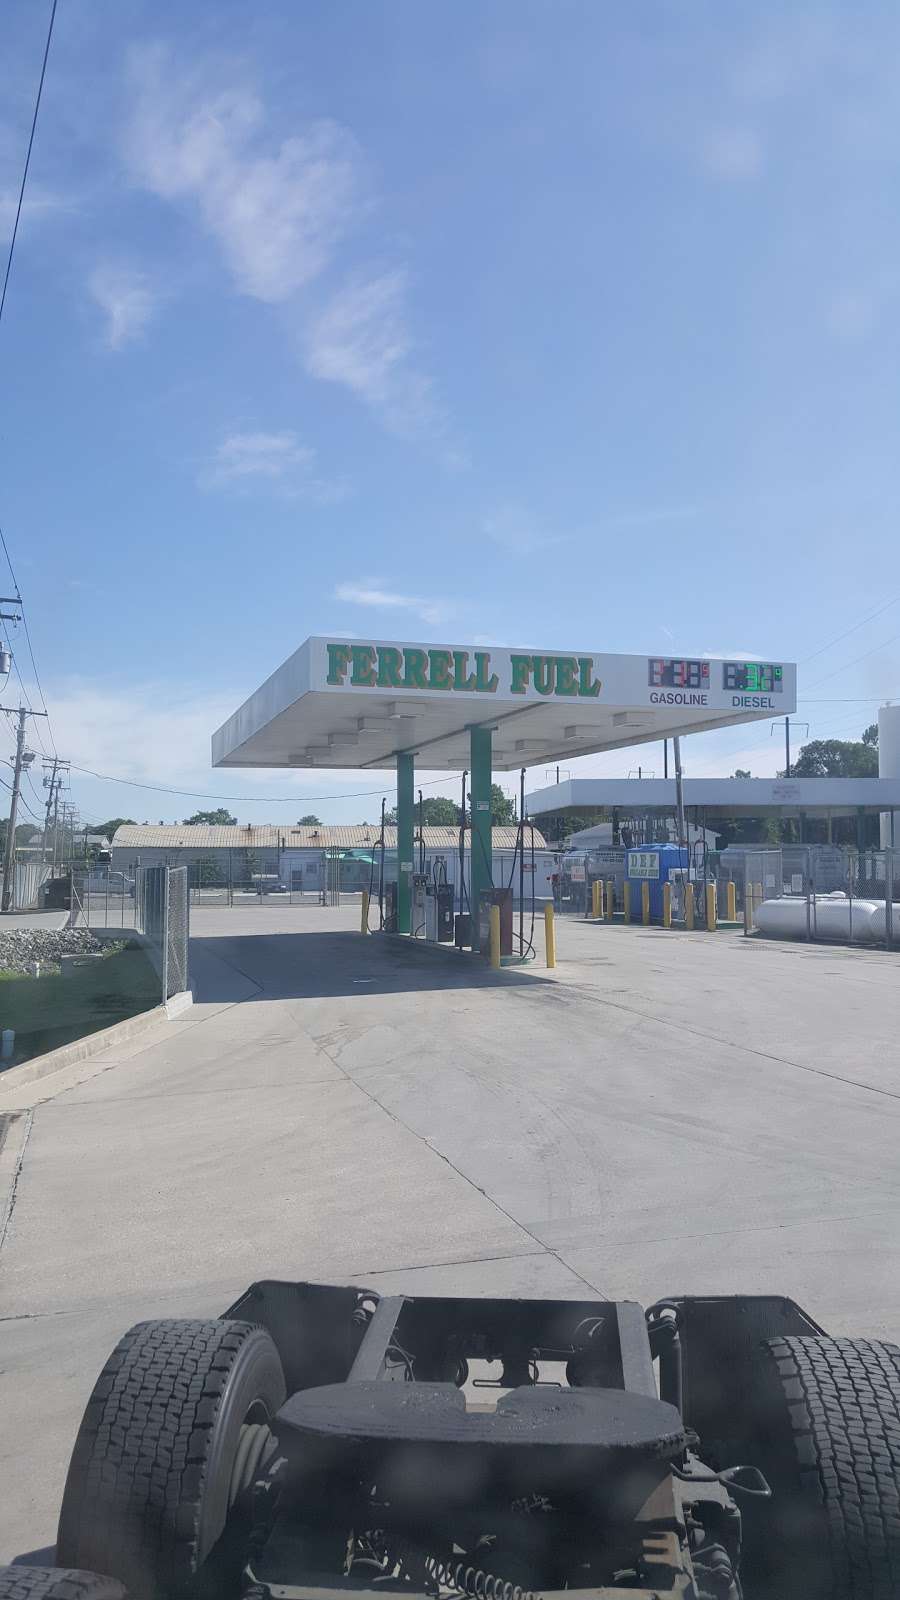 Ferrell Fuel Co. Inc. | 607 Old Philadelphia Rd, Aberdeen, MD 21001 | Phone: (410) 272-4650